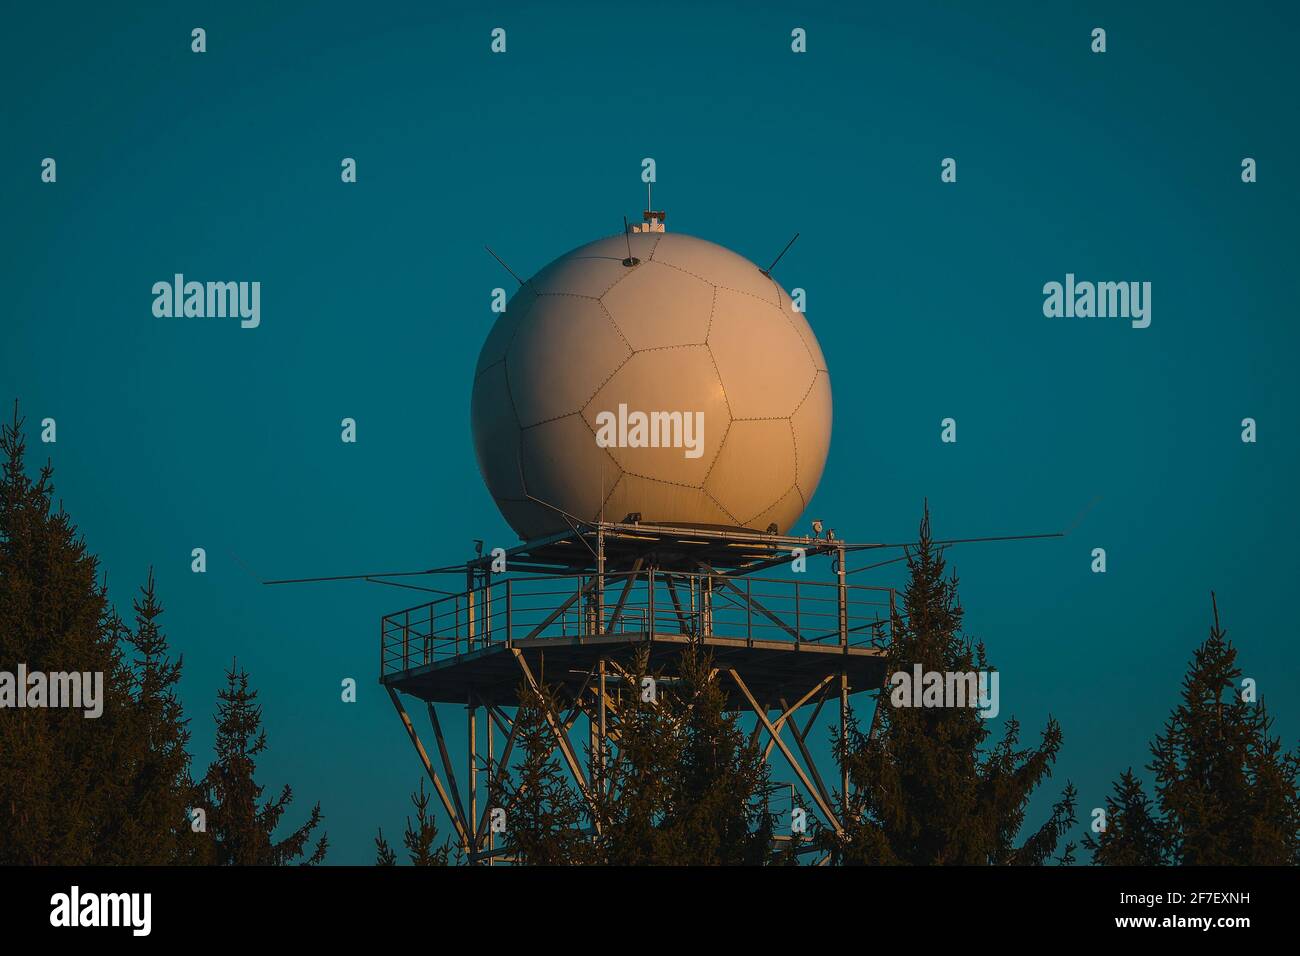 Regenradar -Fotos und -Bildmaterial in hoher Auflösung – Alamy